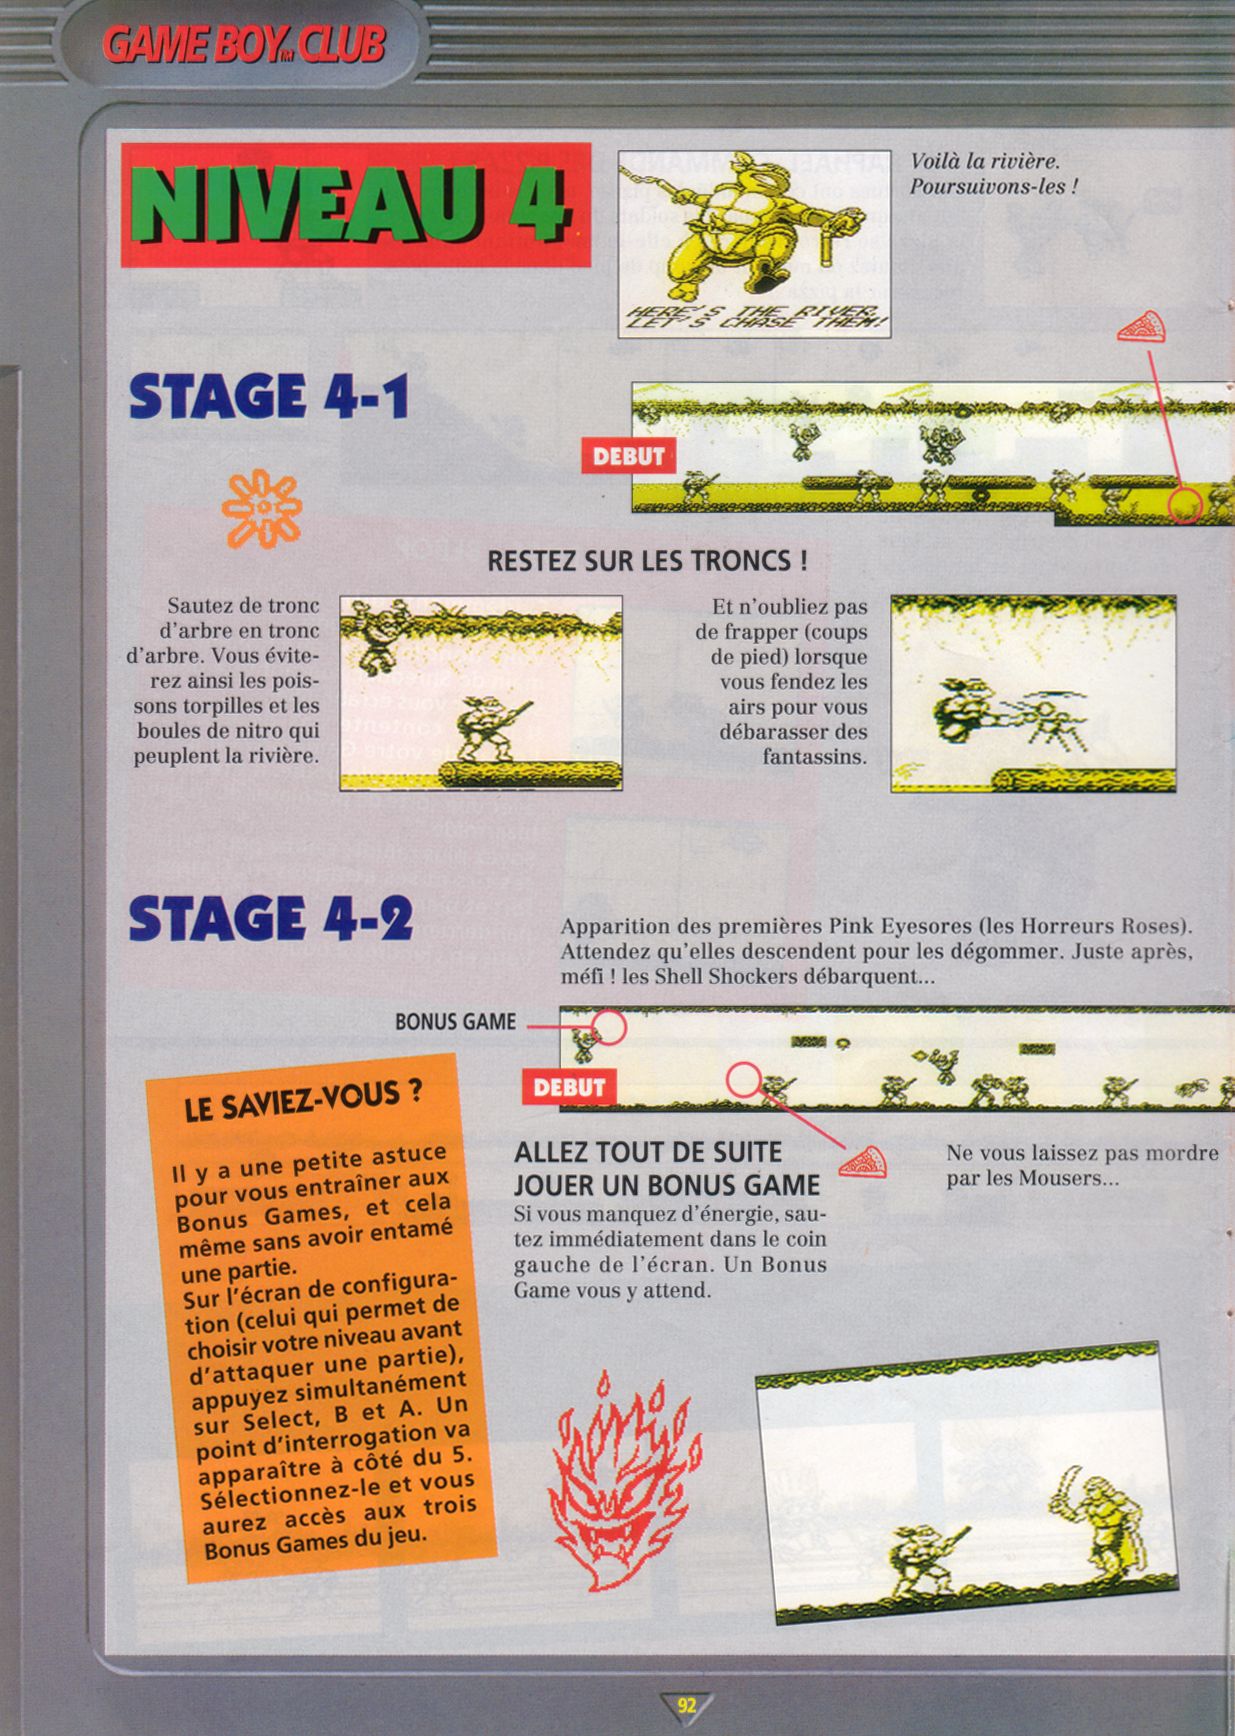 tests//1052/Nintendo Player 004 - Page 092 (1992-05-06).jpg